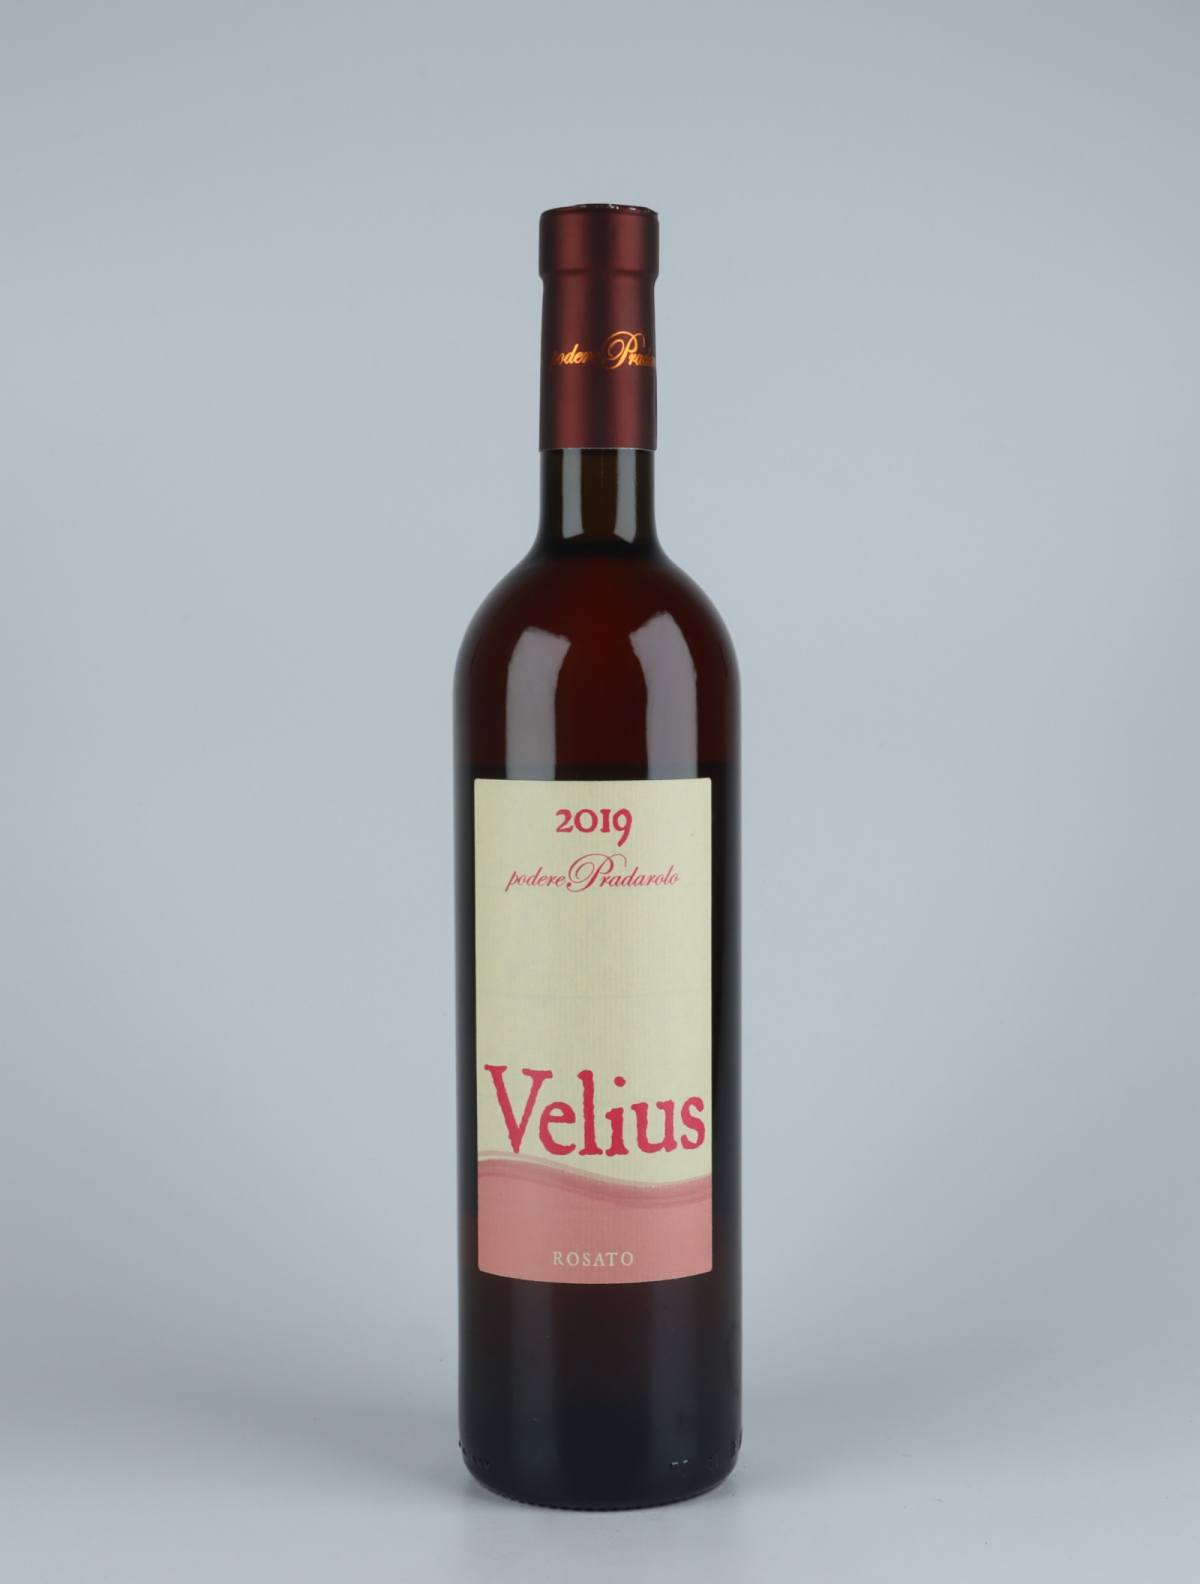 En flaske 2019 Velius Rosato Rosé fra Podere Pradarolo, Emilia-Romagna i Italien